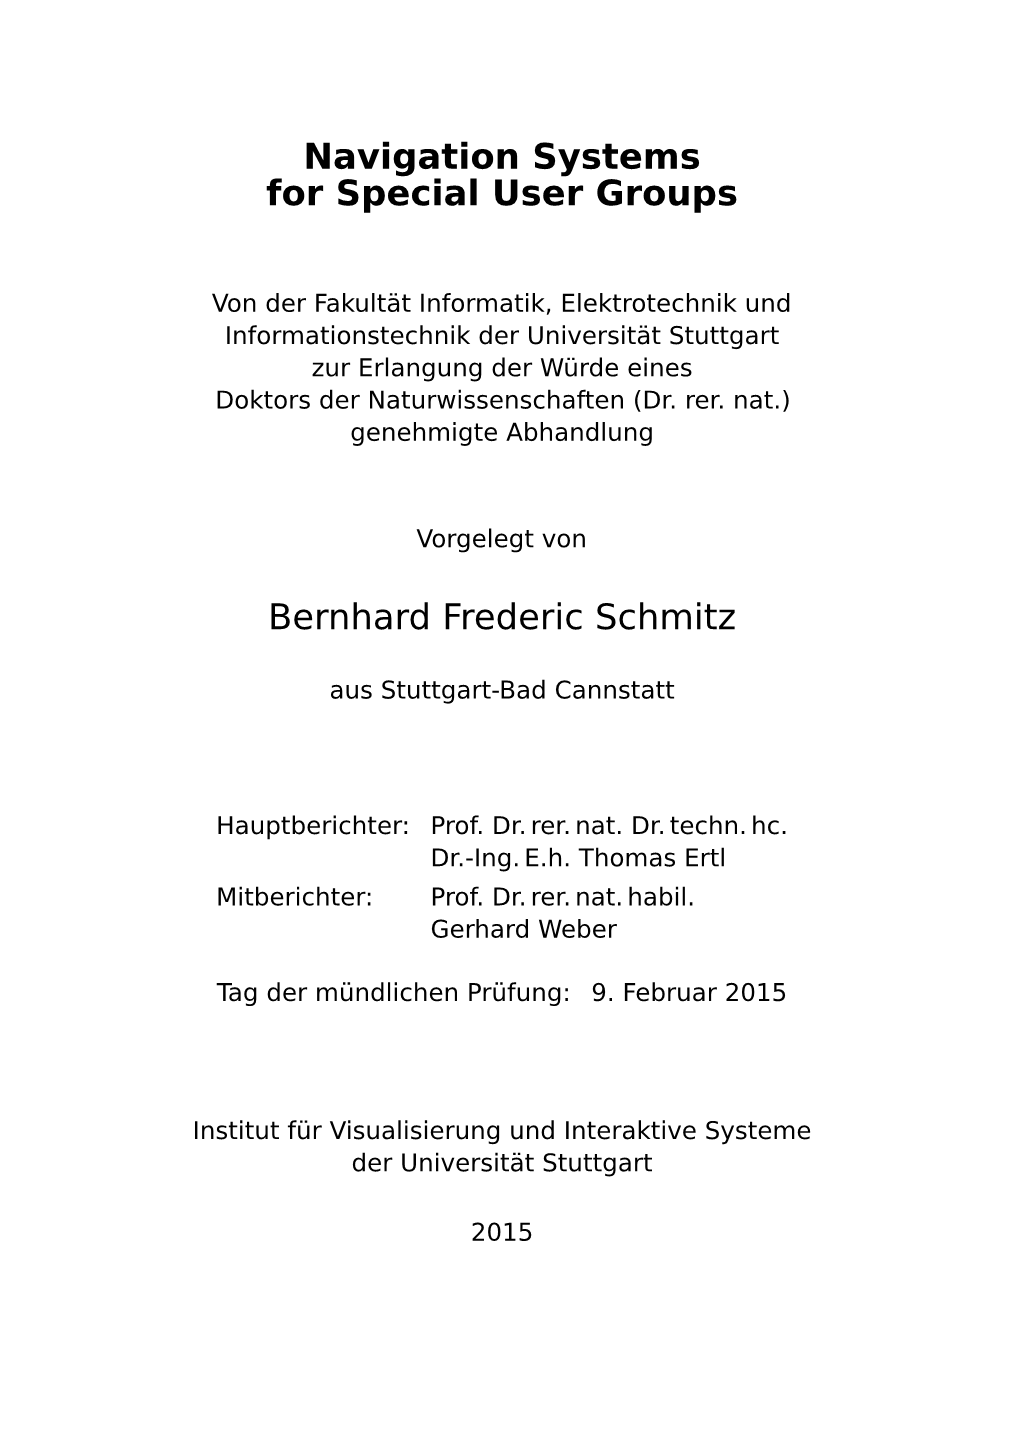 Navigation Systems for Special User Groups Bernhard Frederic Schmitz